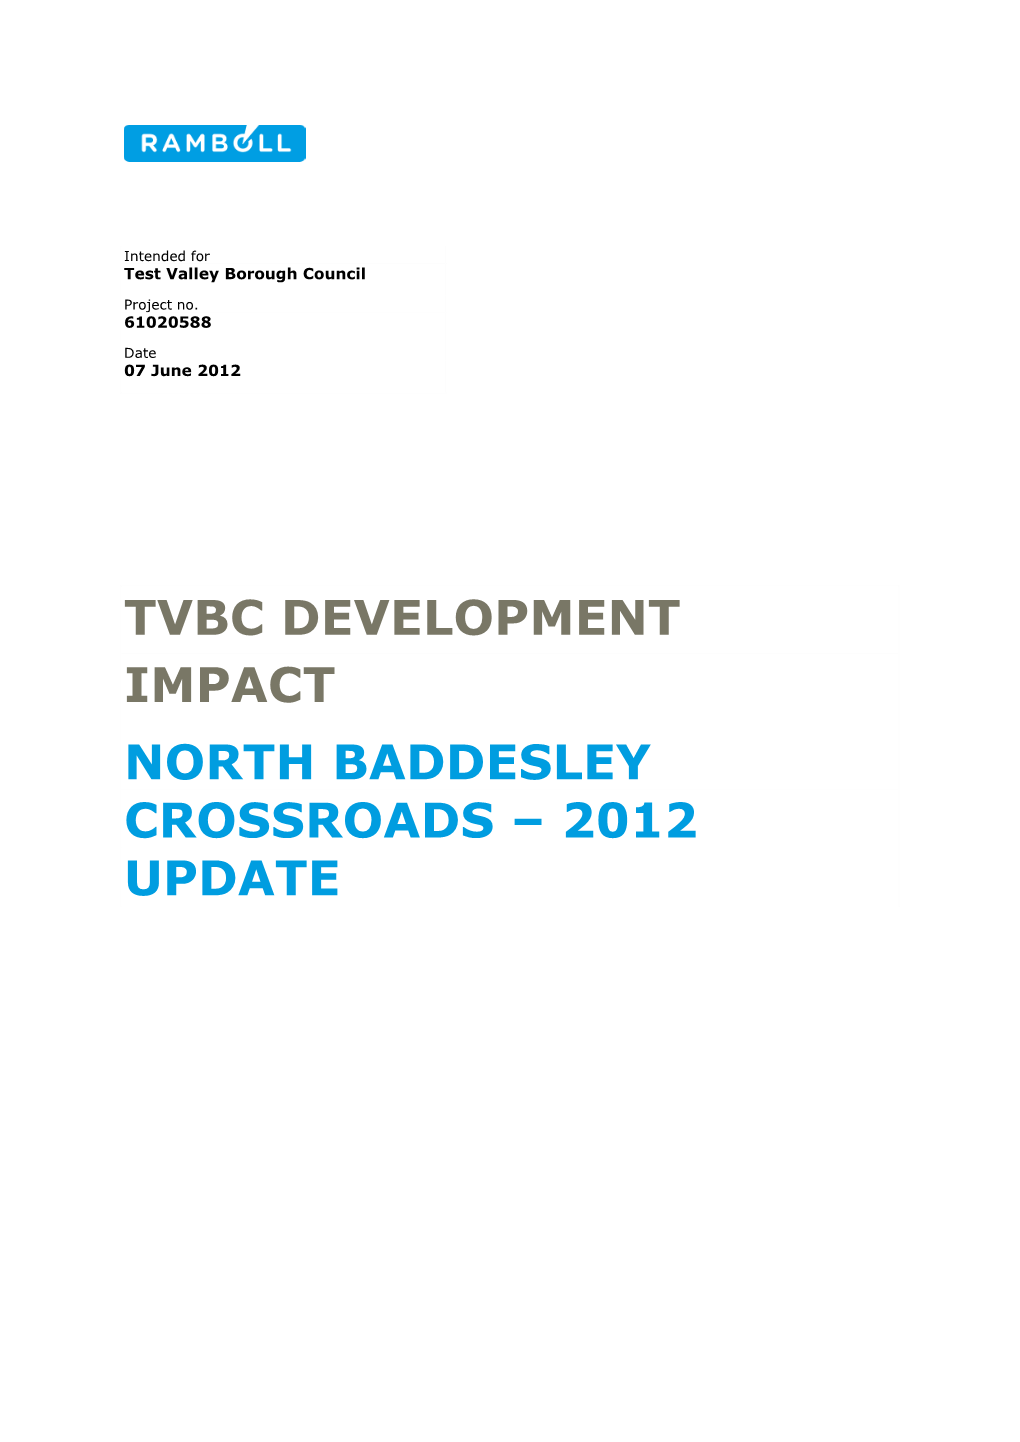 North Baddesley Crossroads – 2012 Update